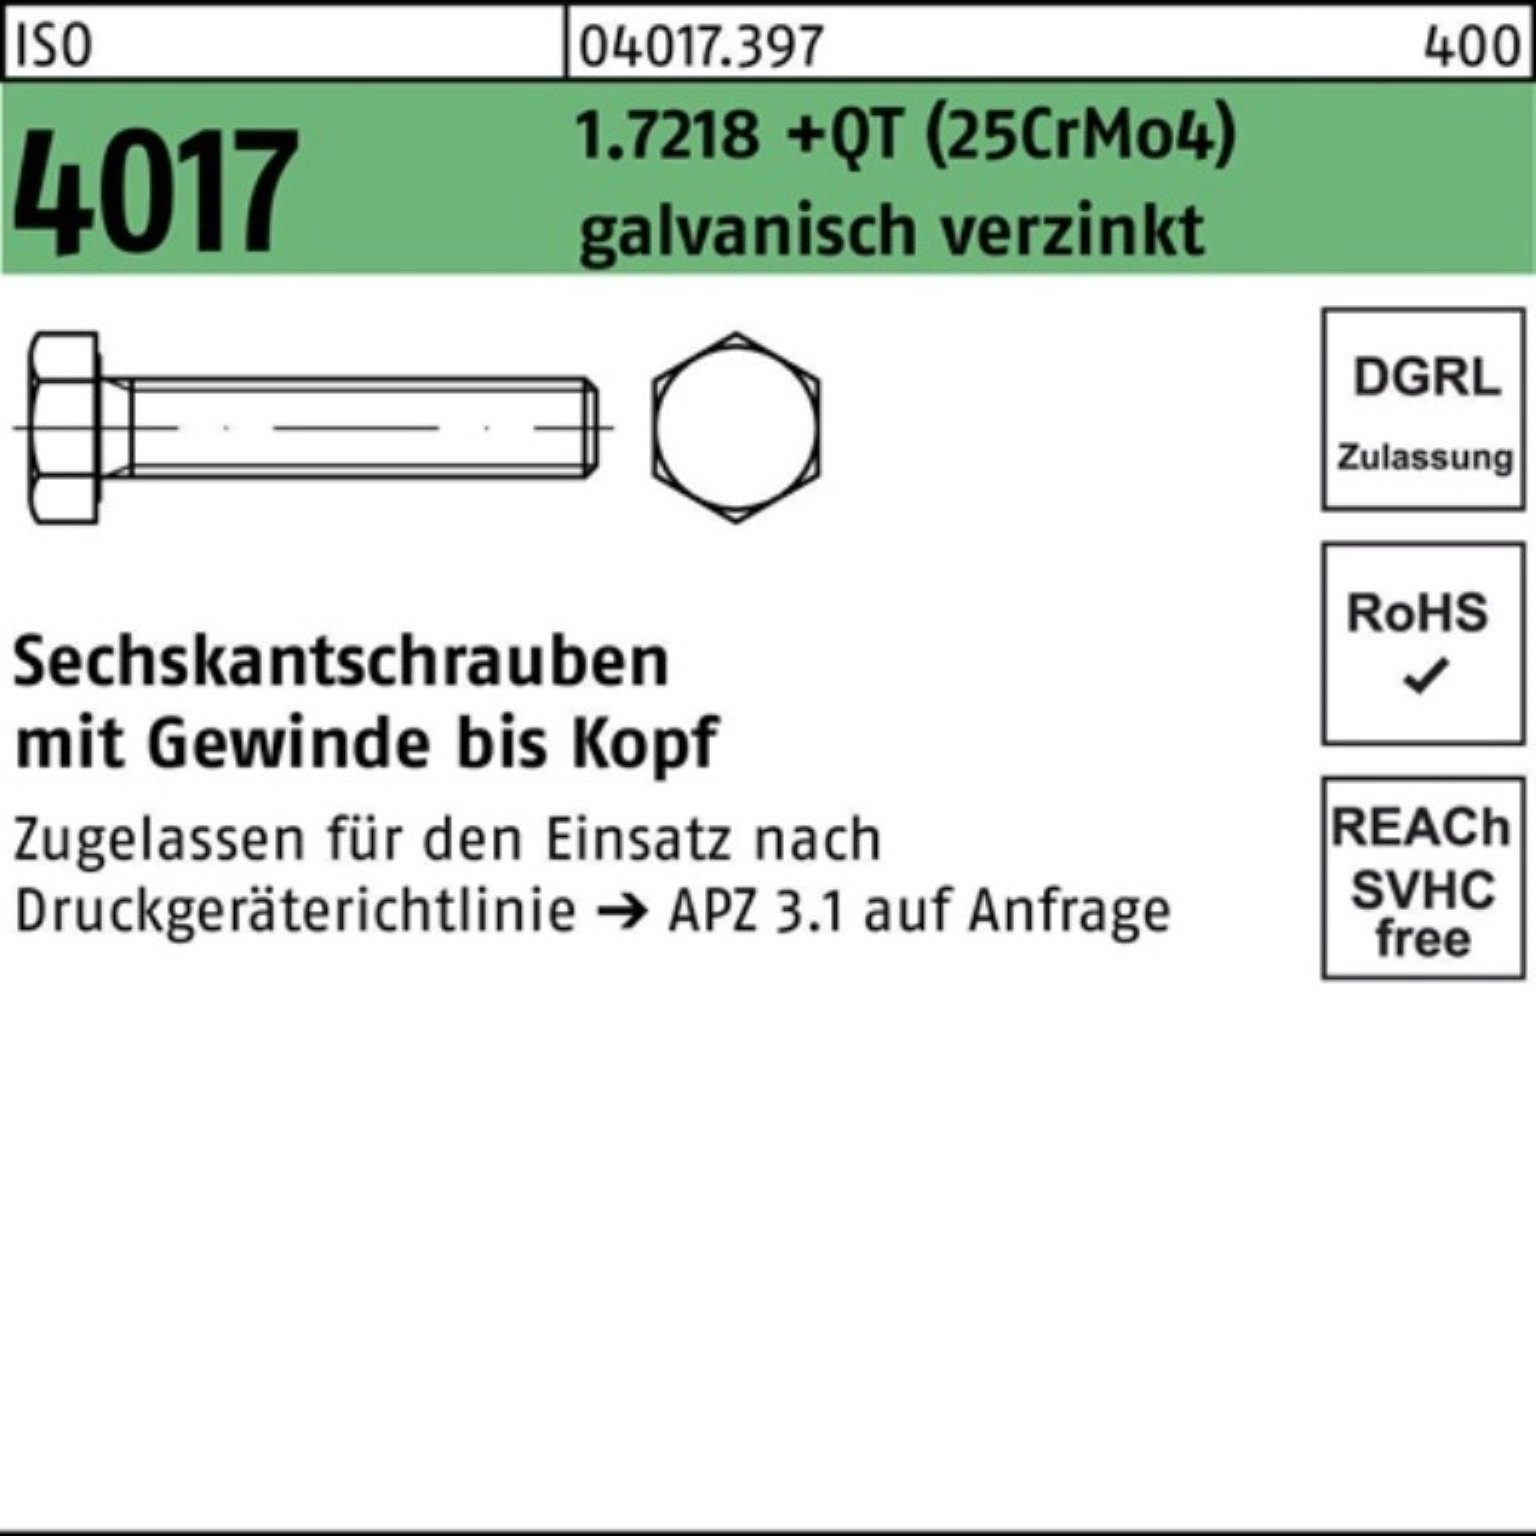 1.7218 M24x80 VG g Sechskantschraube Sechskantschraube 100er (25CrMo4) +QT Bufab Pack 4017 ISO